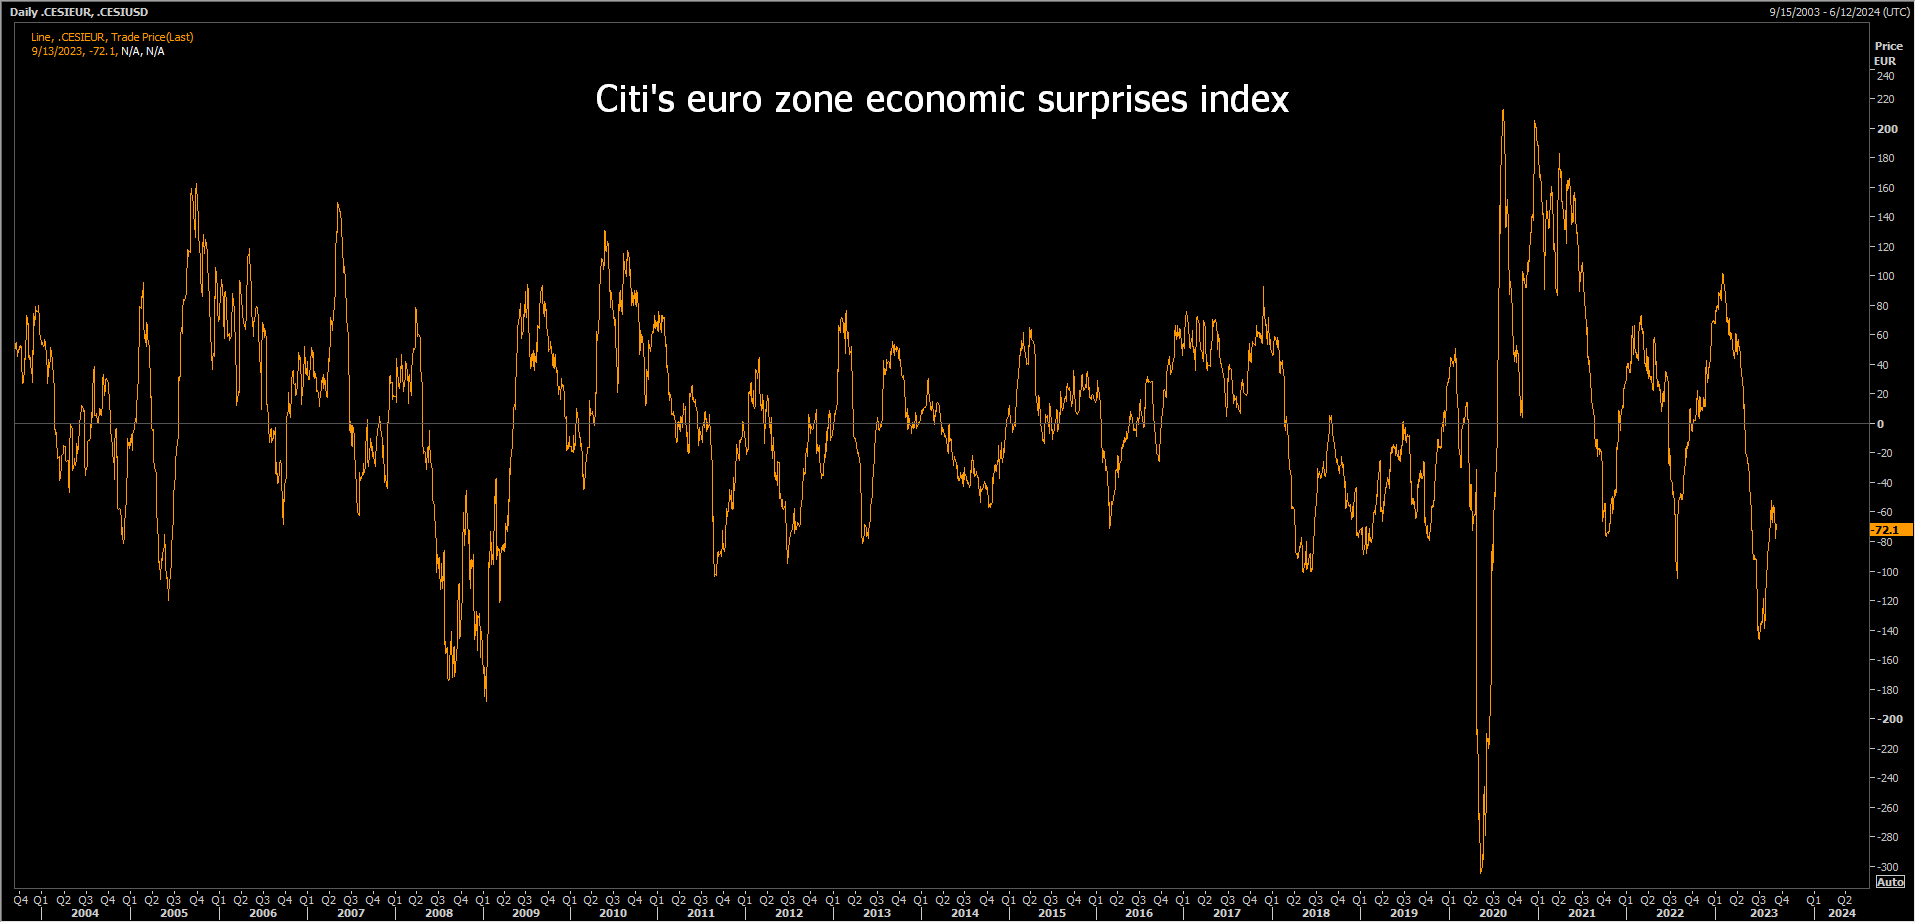 Euro zone economic surprises index - negative since May